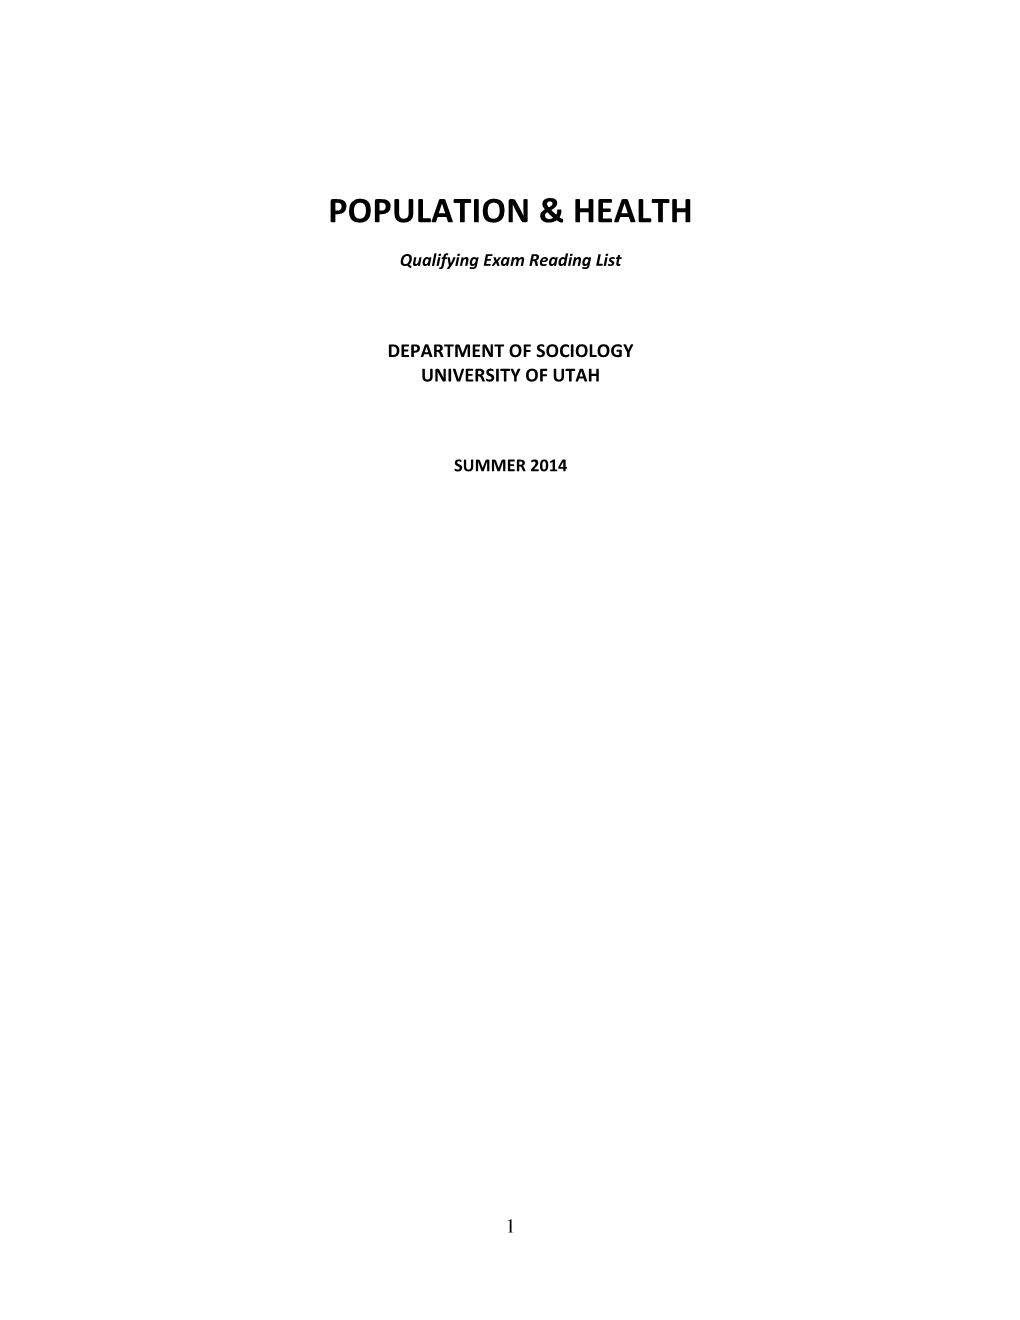 Population & Health